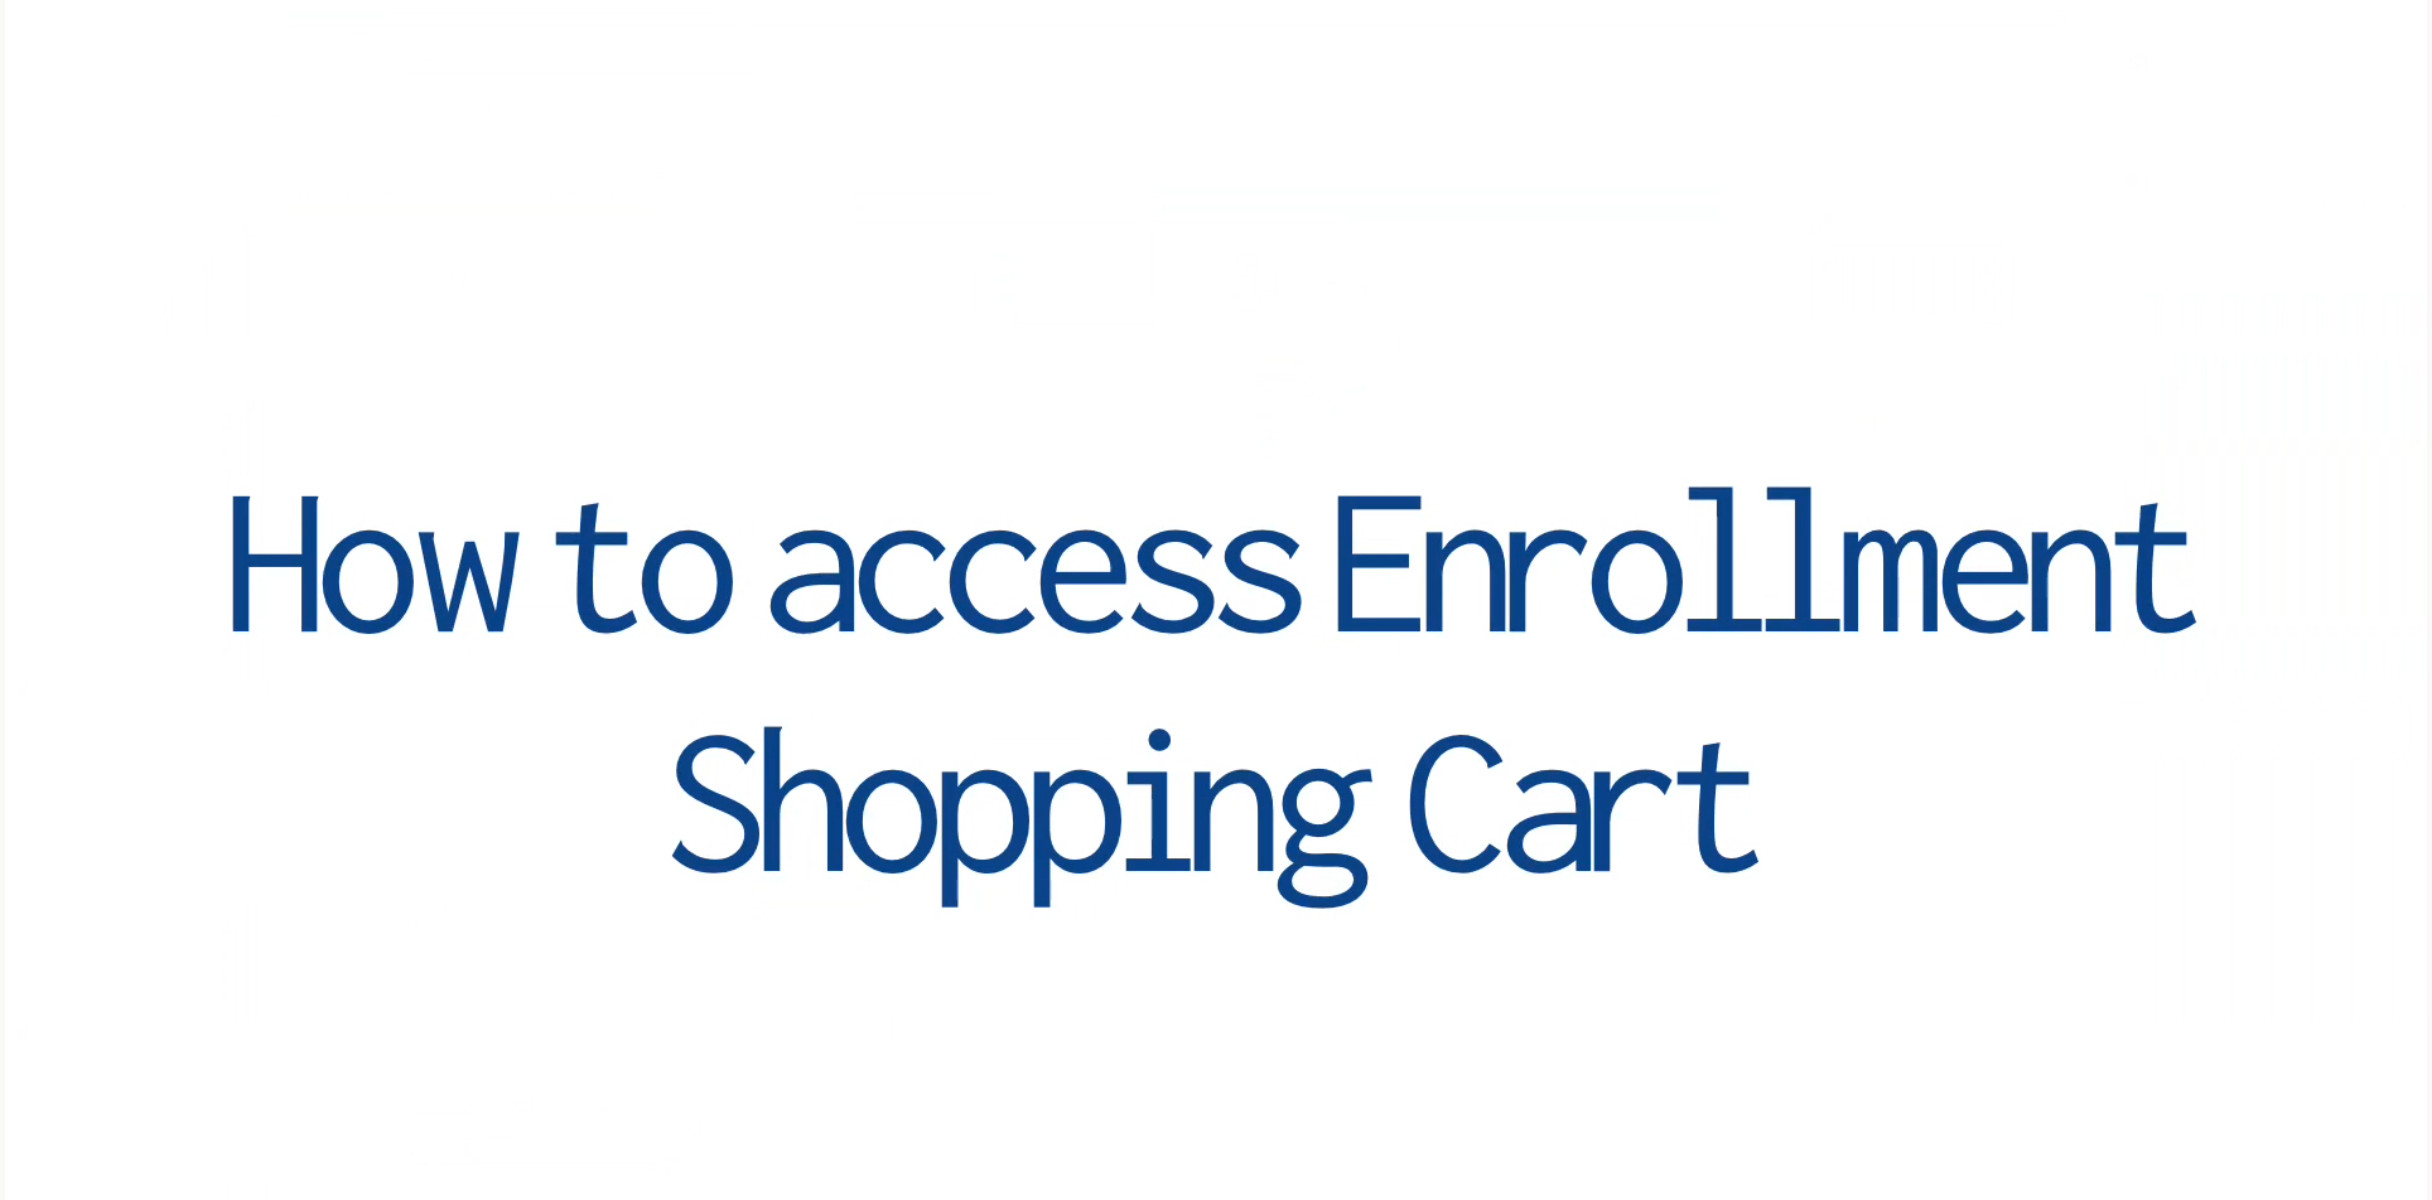 How to Access Enrollment Shopping Cart